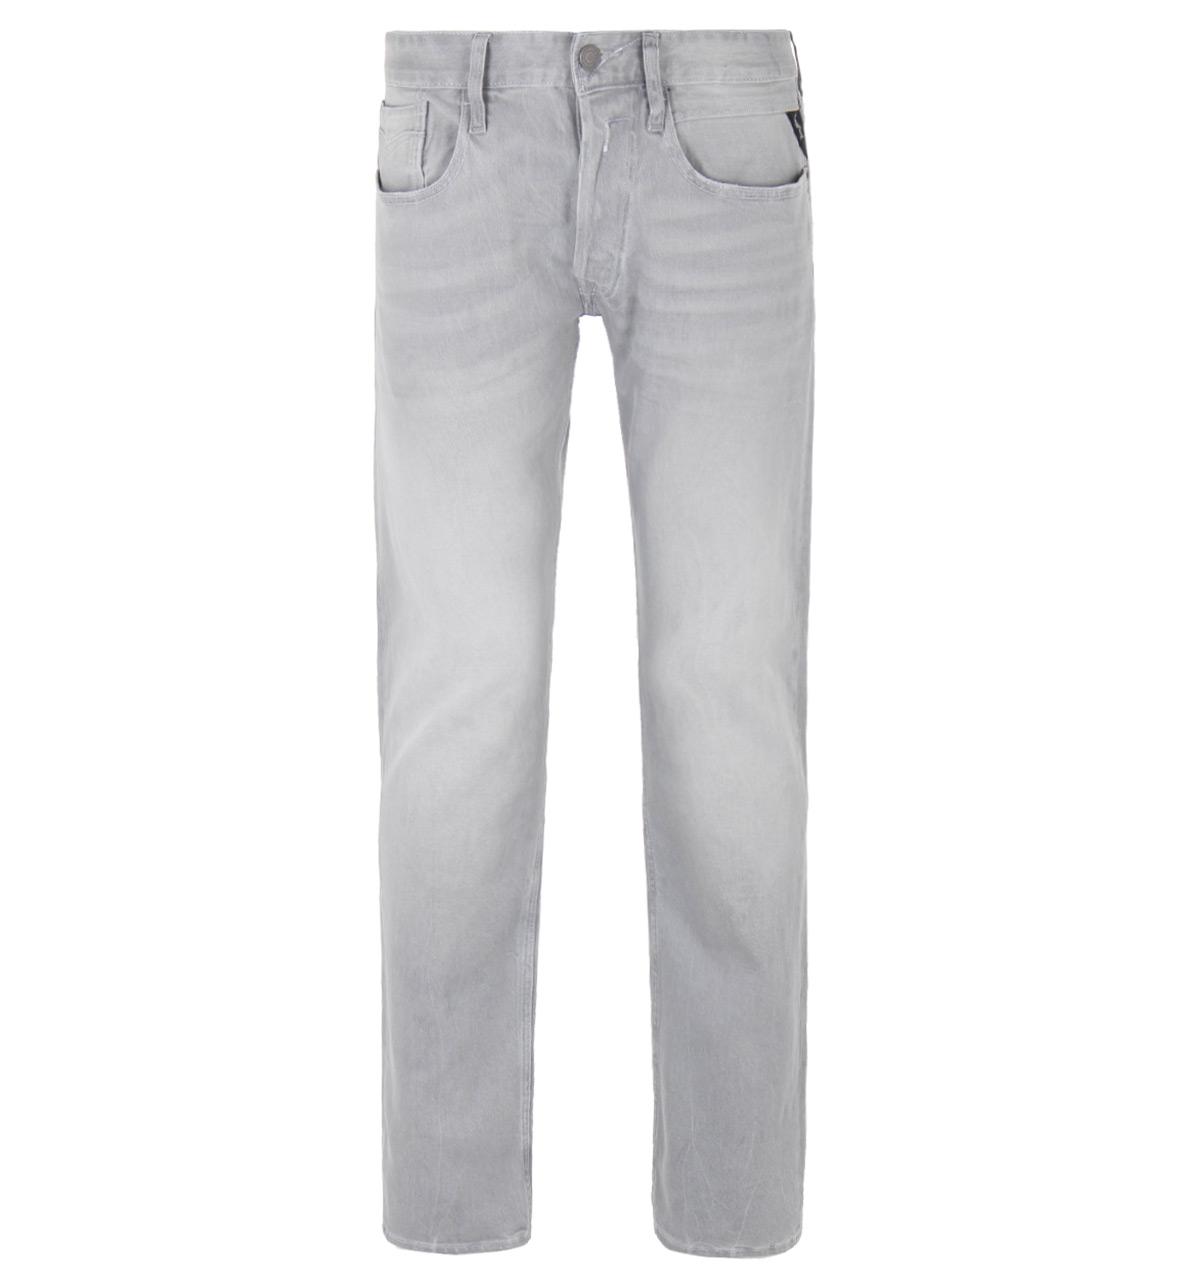 Lyst - Replay Newbill Light Grey Stretch Denim Comfort Fit Jeans in ...